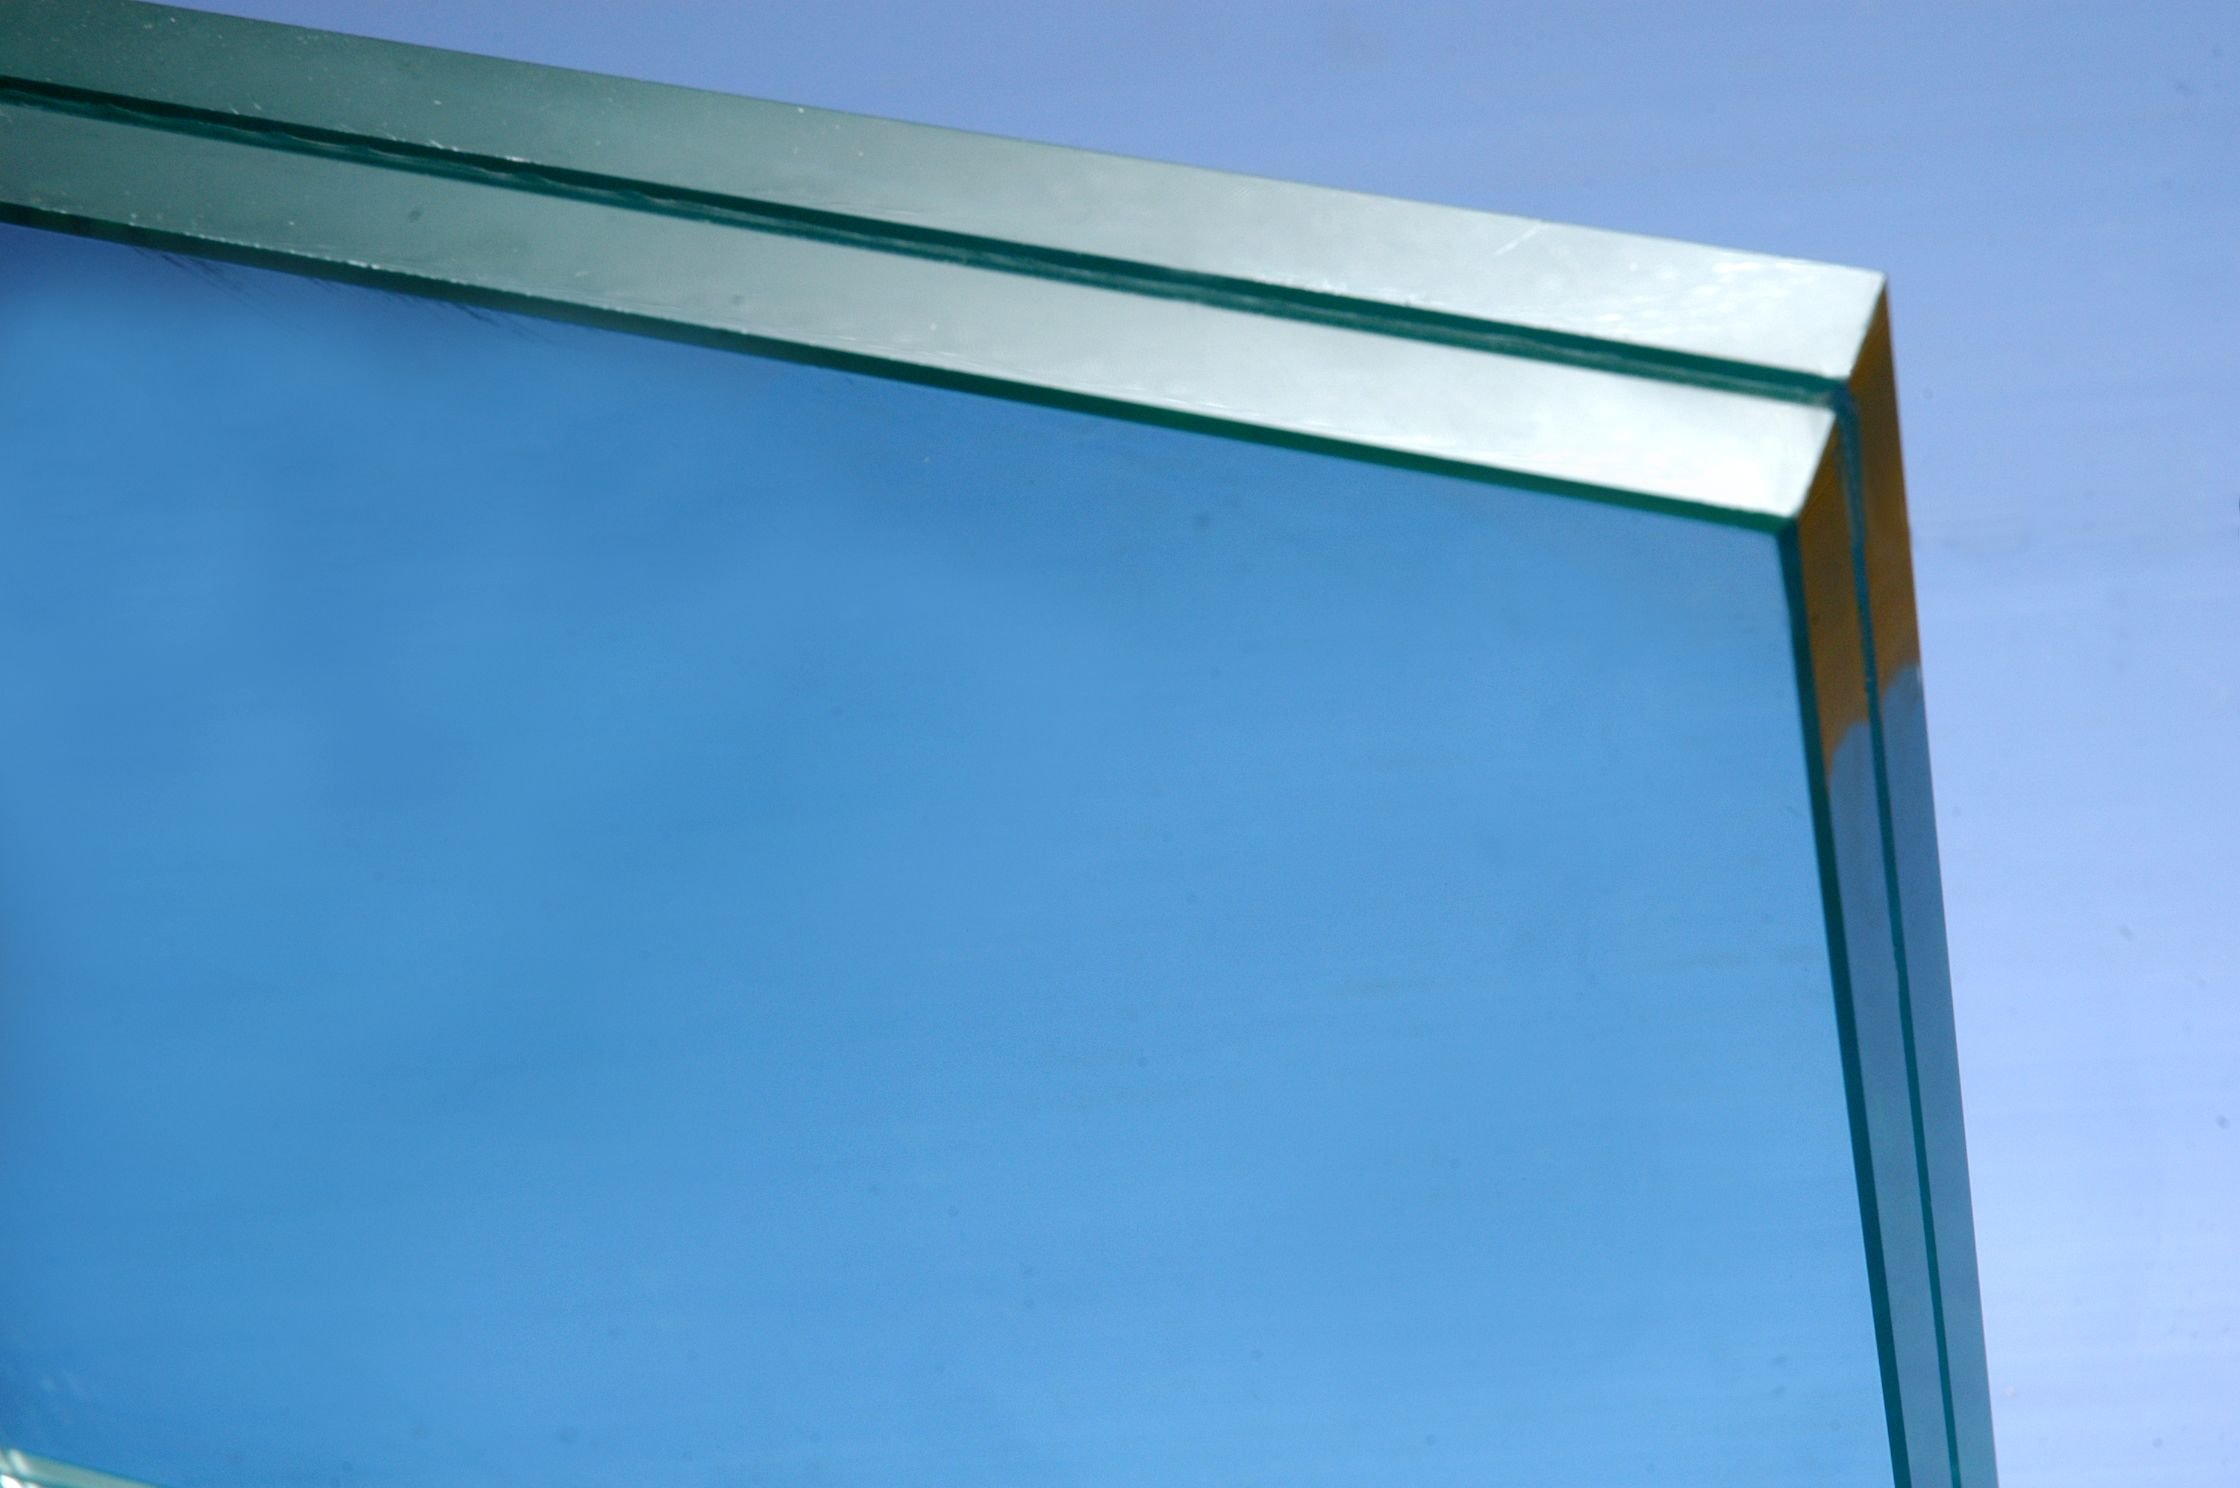 Close up image of laminated glass